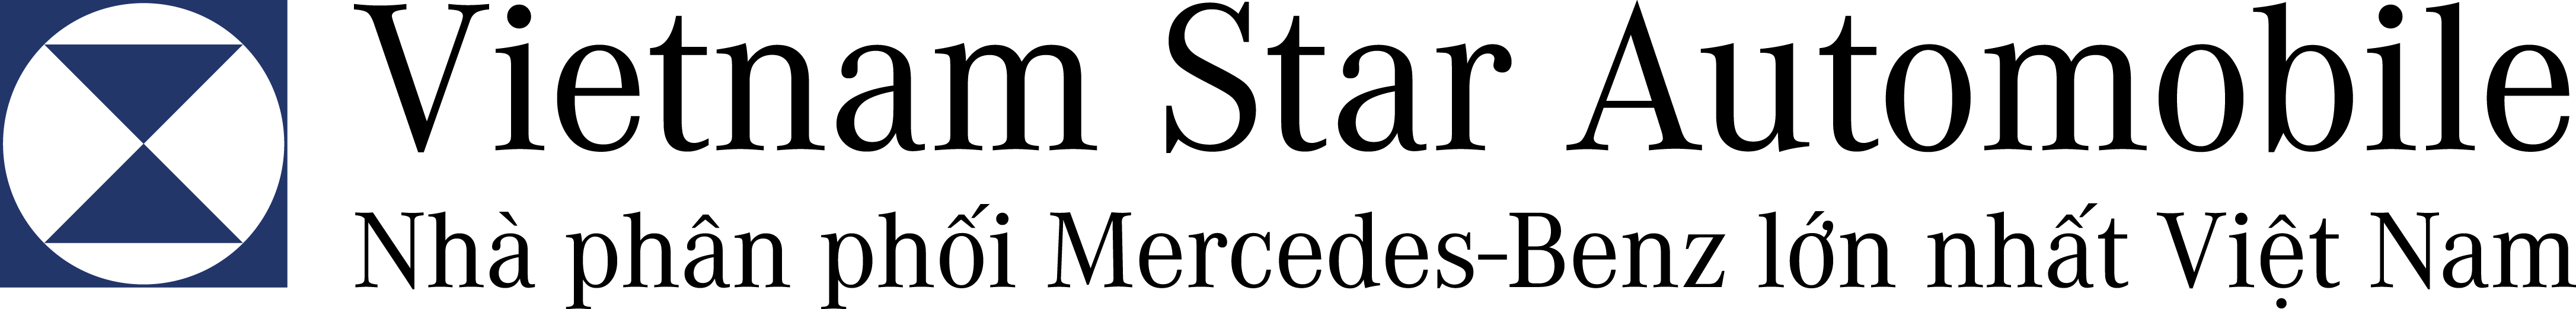 Star Automobile Logo - German Business Association